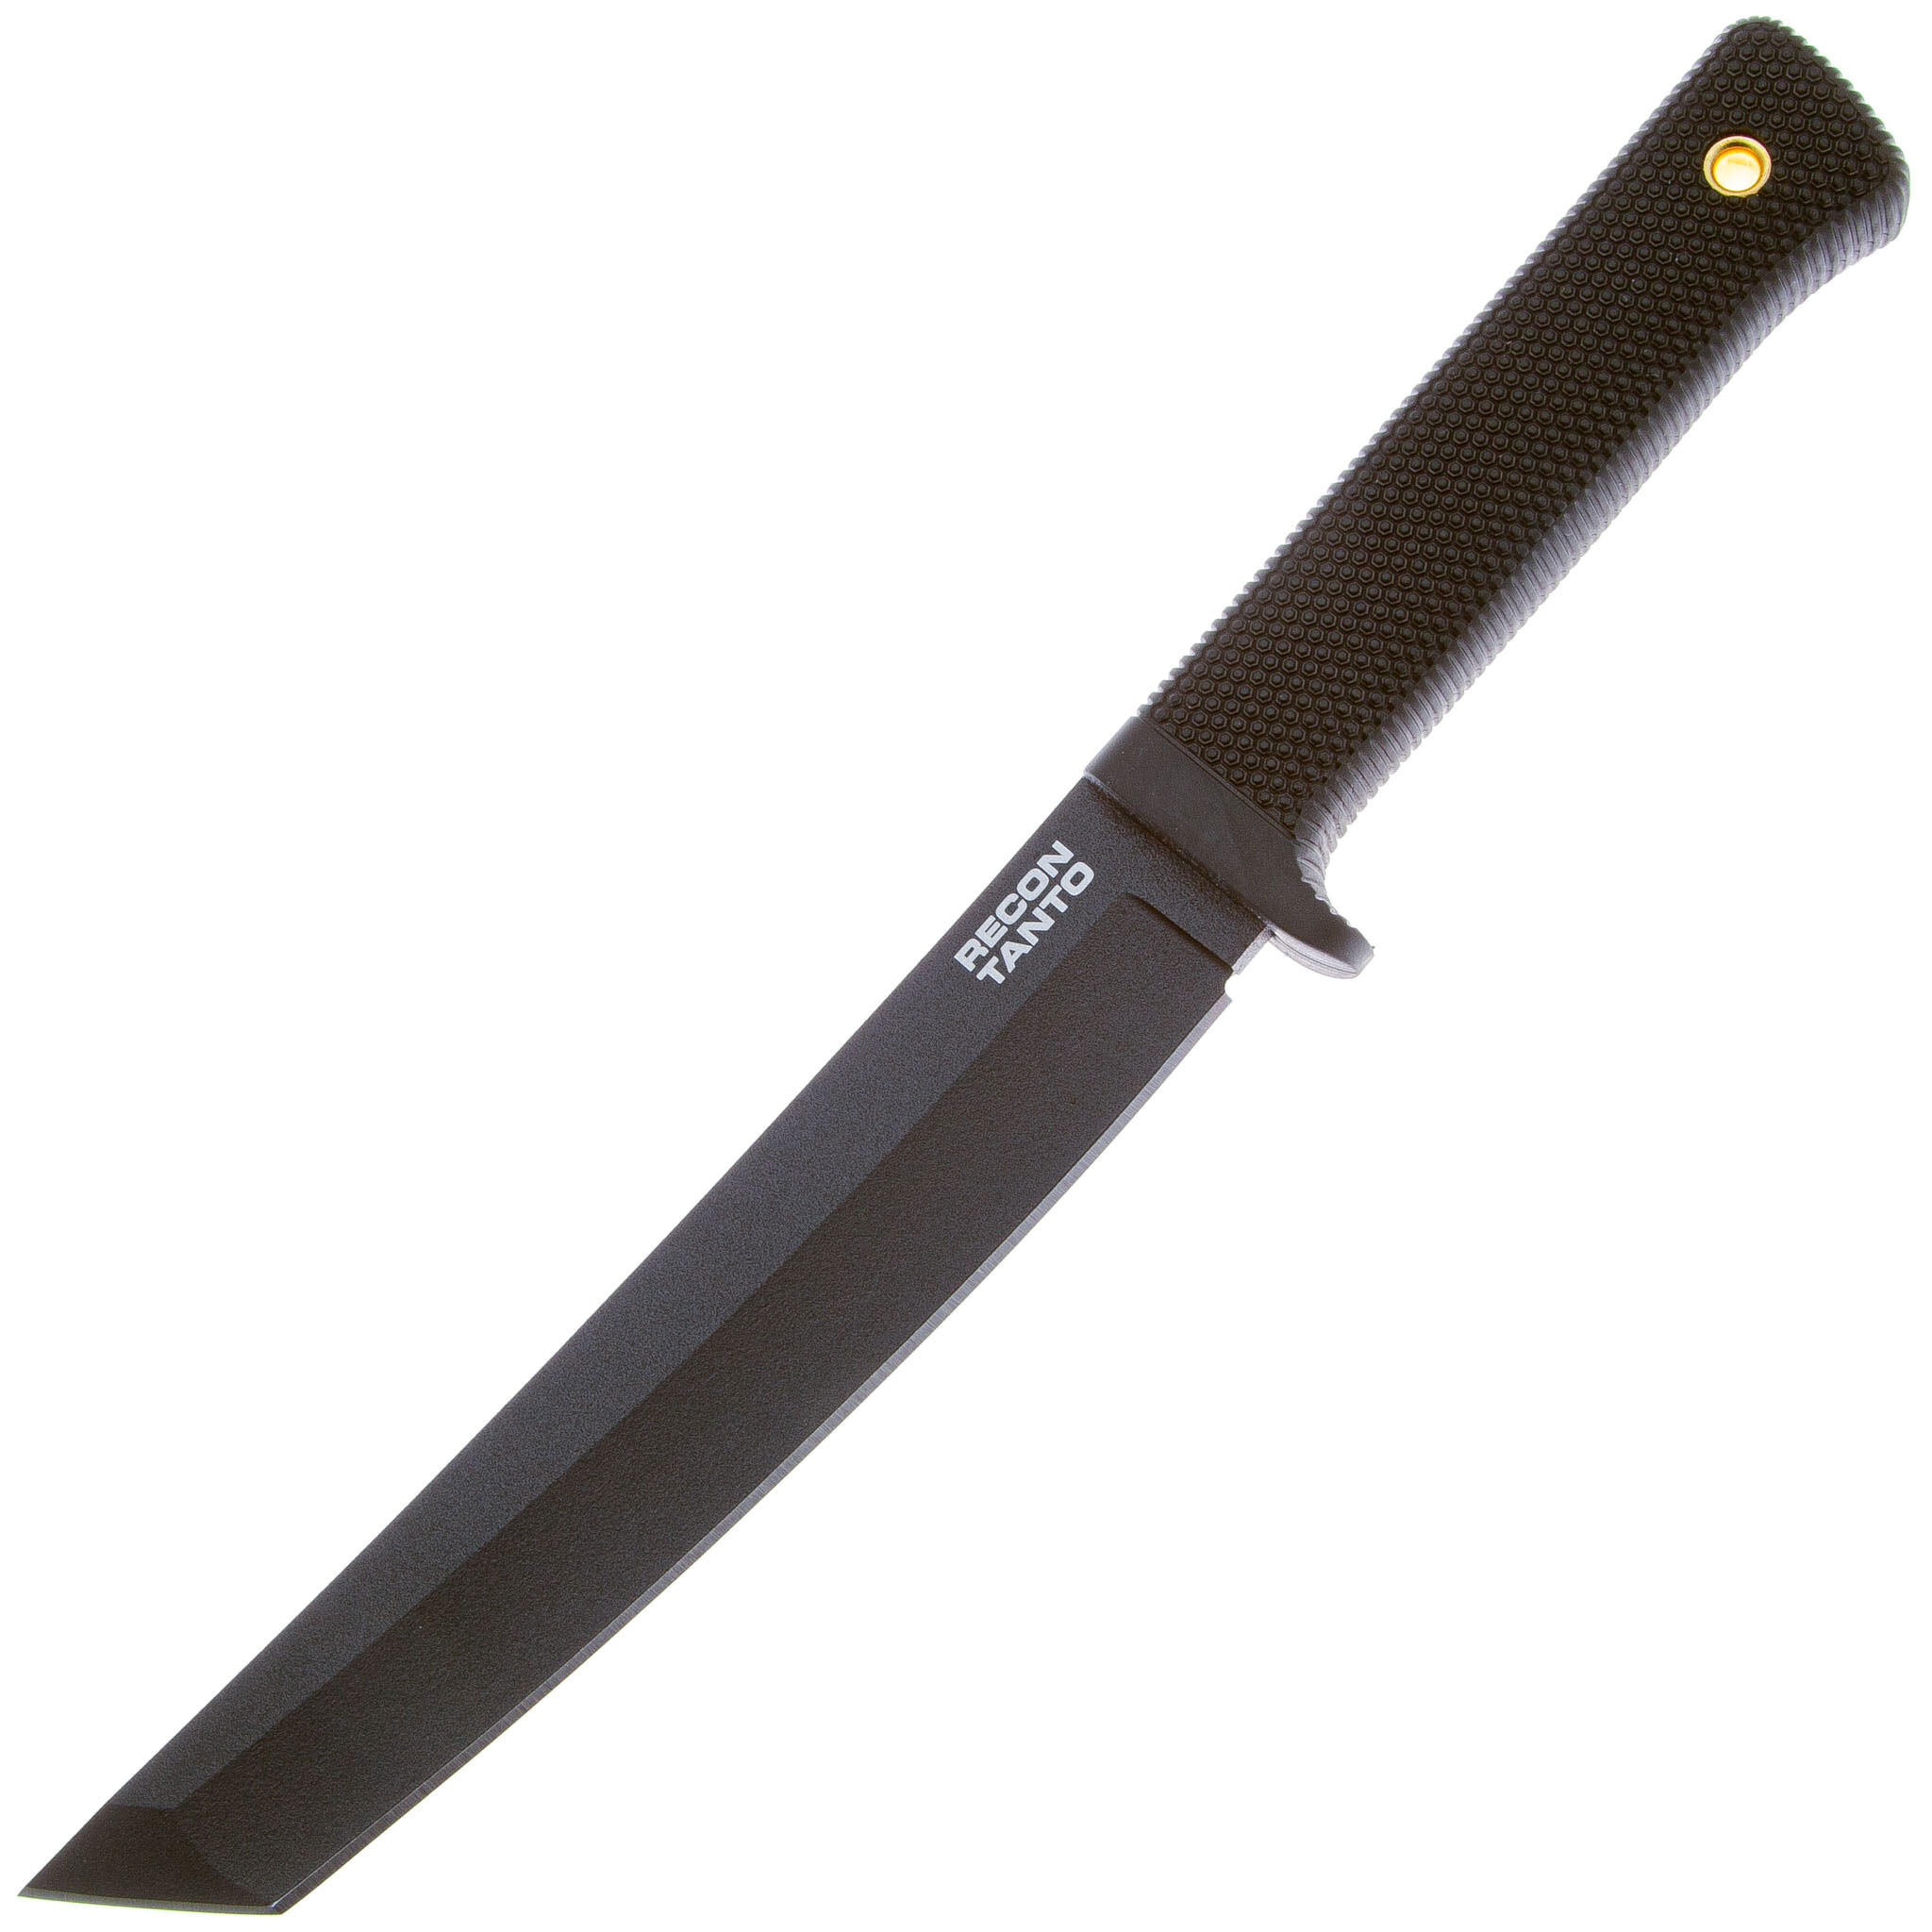 Нож с фиксированным клинком Cold Steel Recon Tanto, сталь SK-5, рукоять резина, black, Бренды, Cold Steel